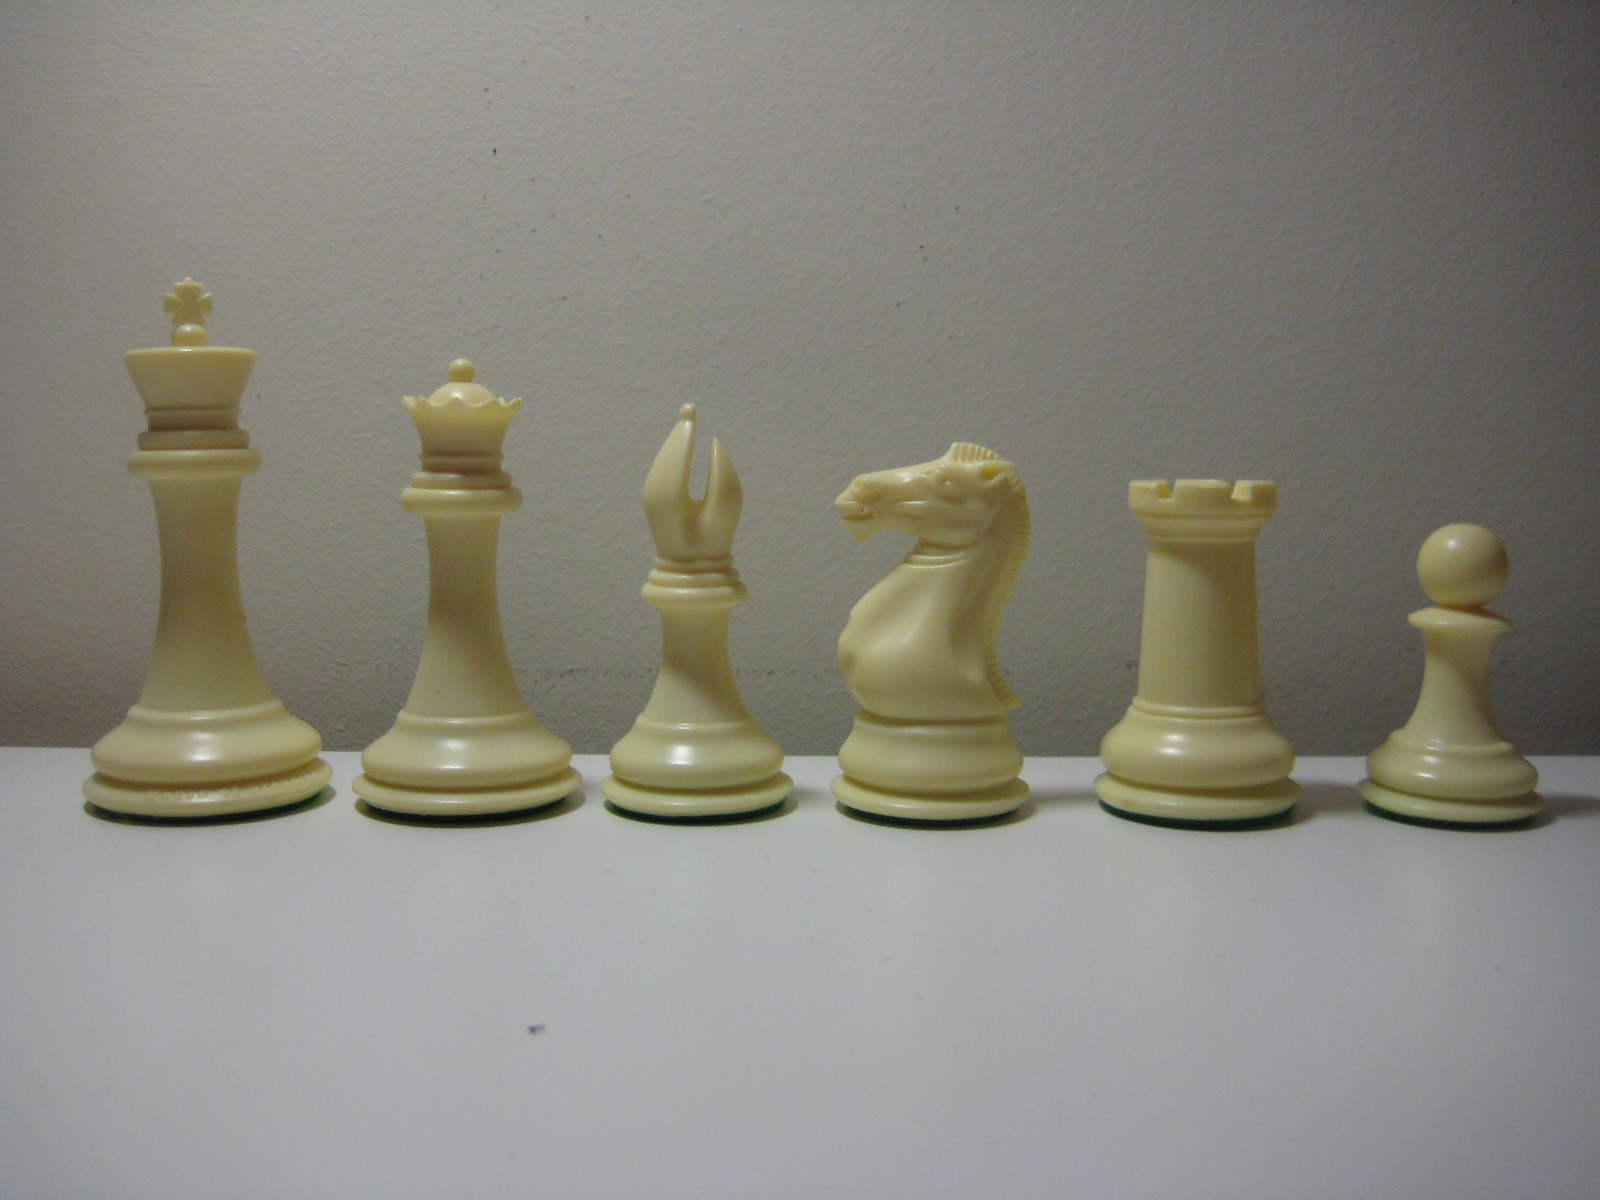 Analysis Size Standard Club Plastic Chess Set Black & Ivory Pieces - 3 King